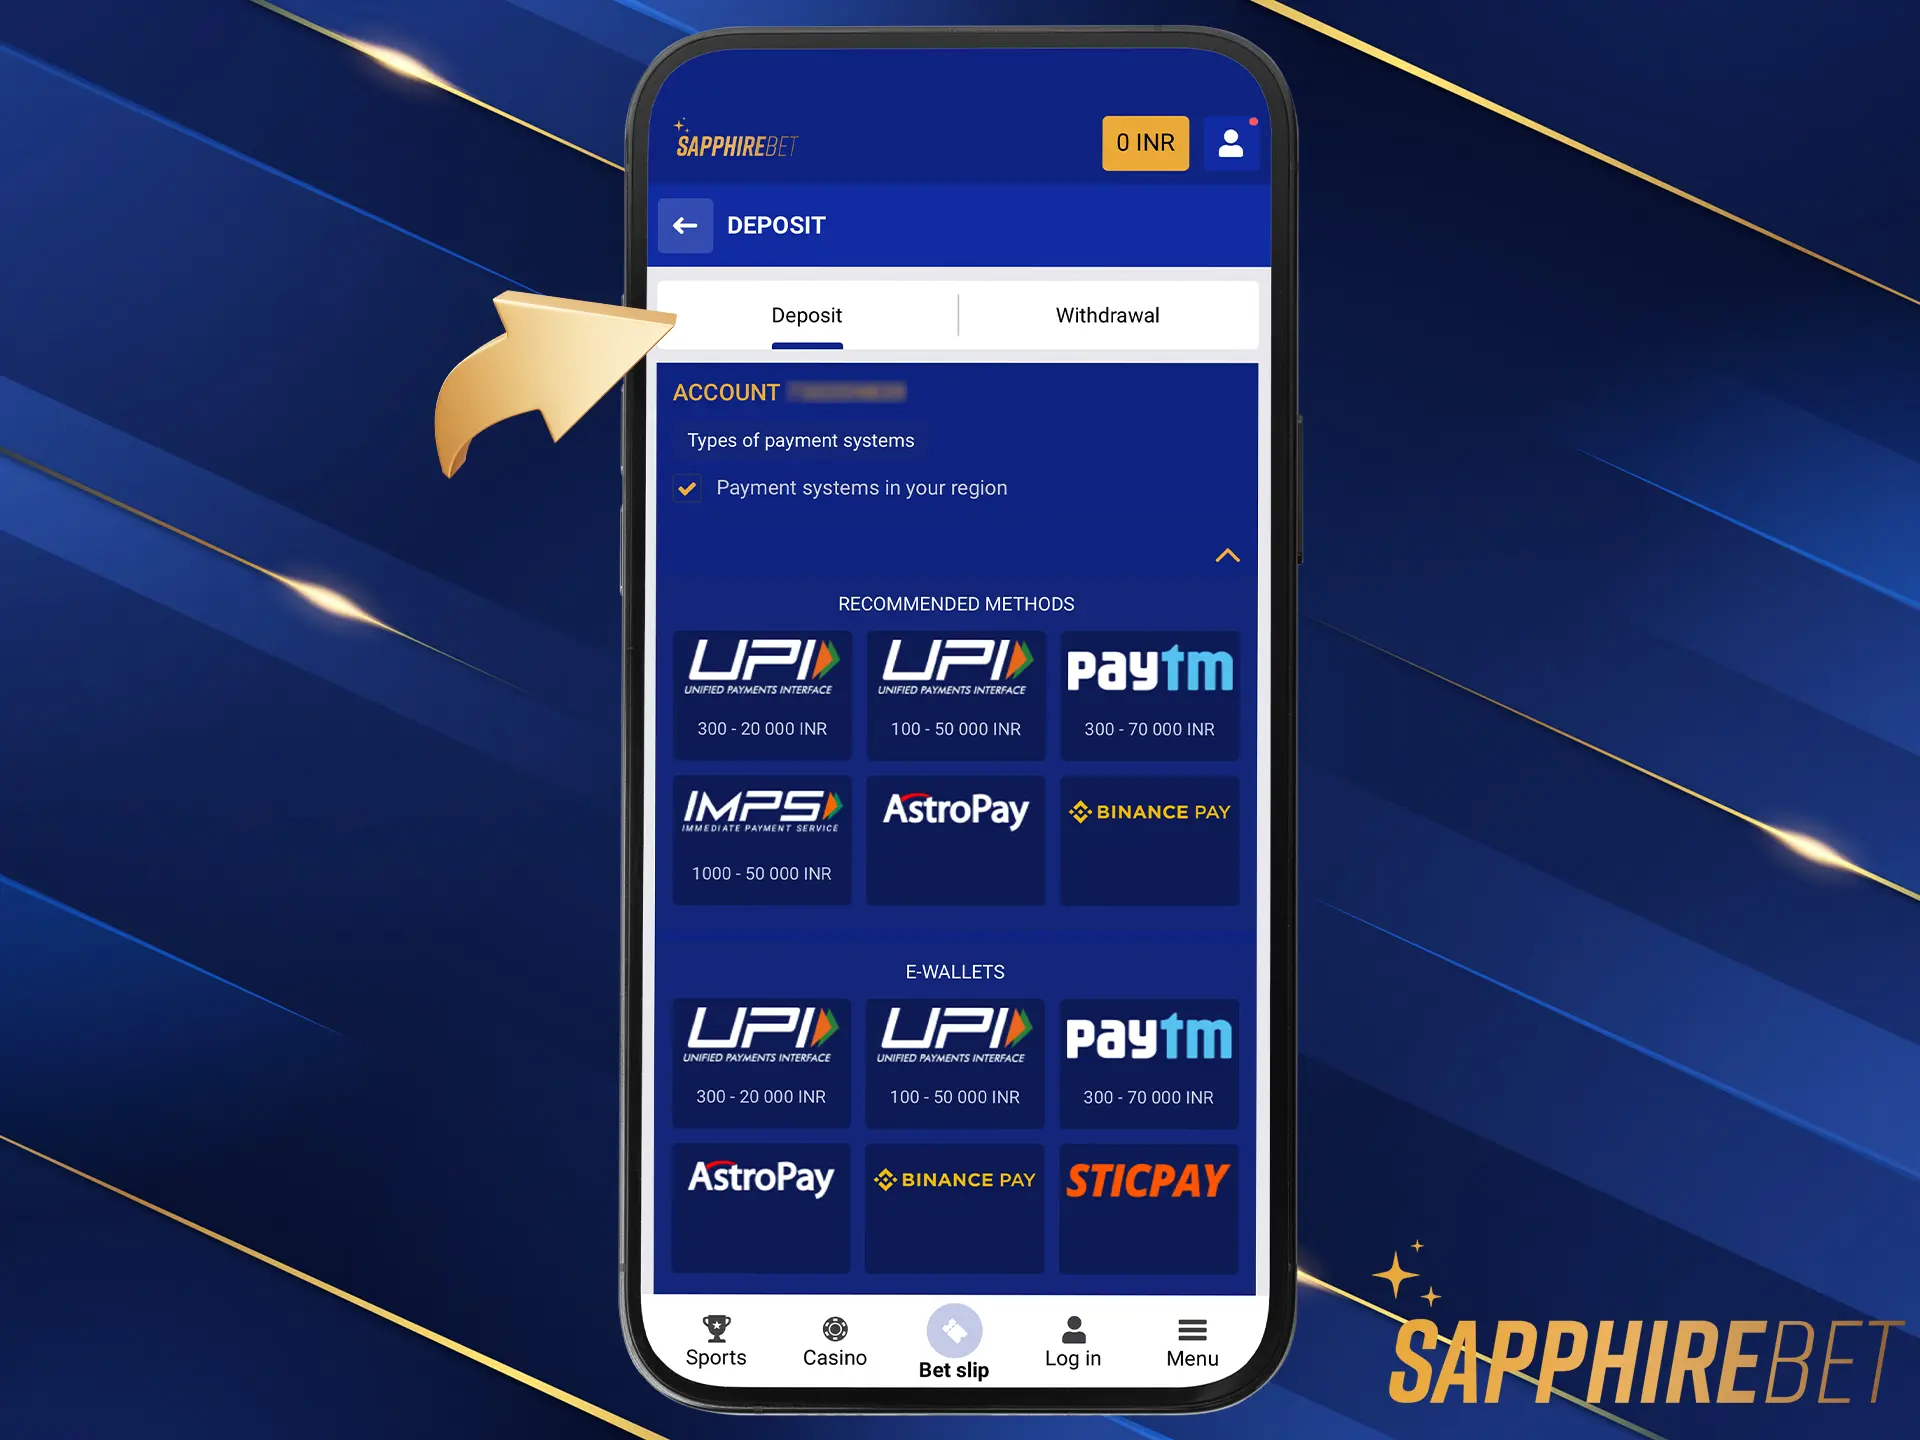 Make your first deposit at SapphireBet.